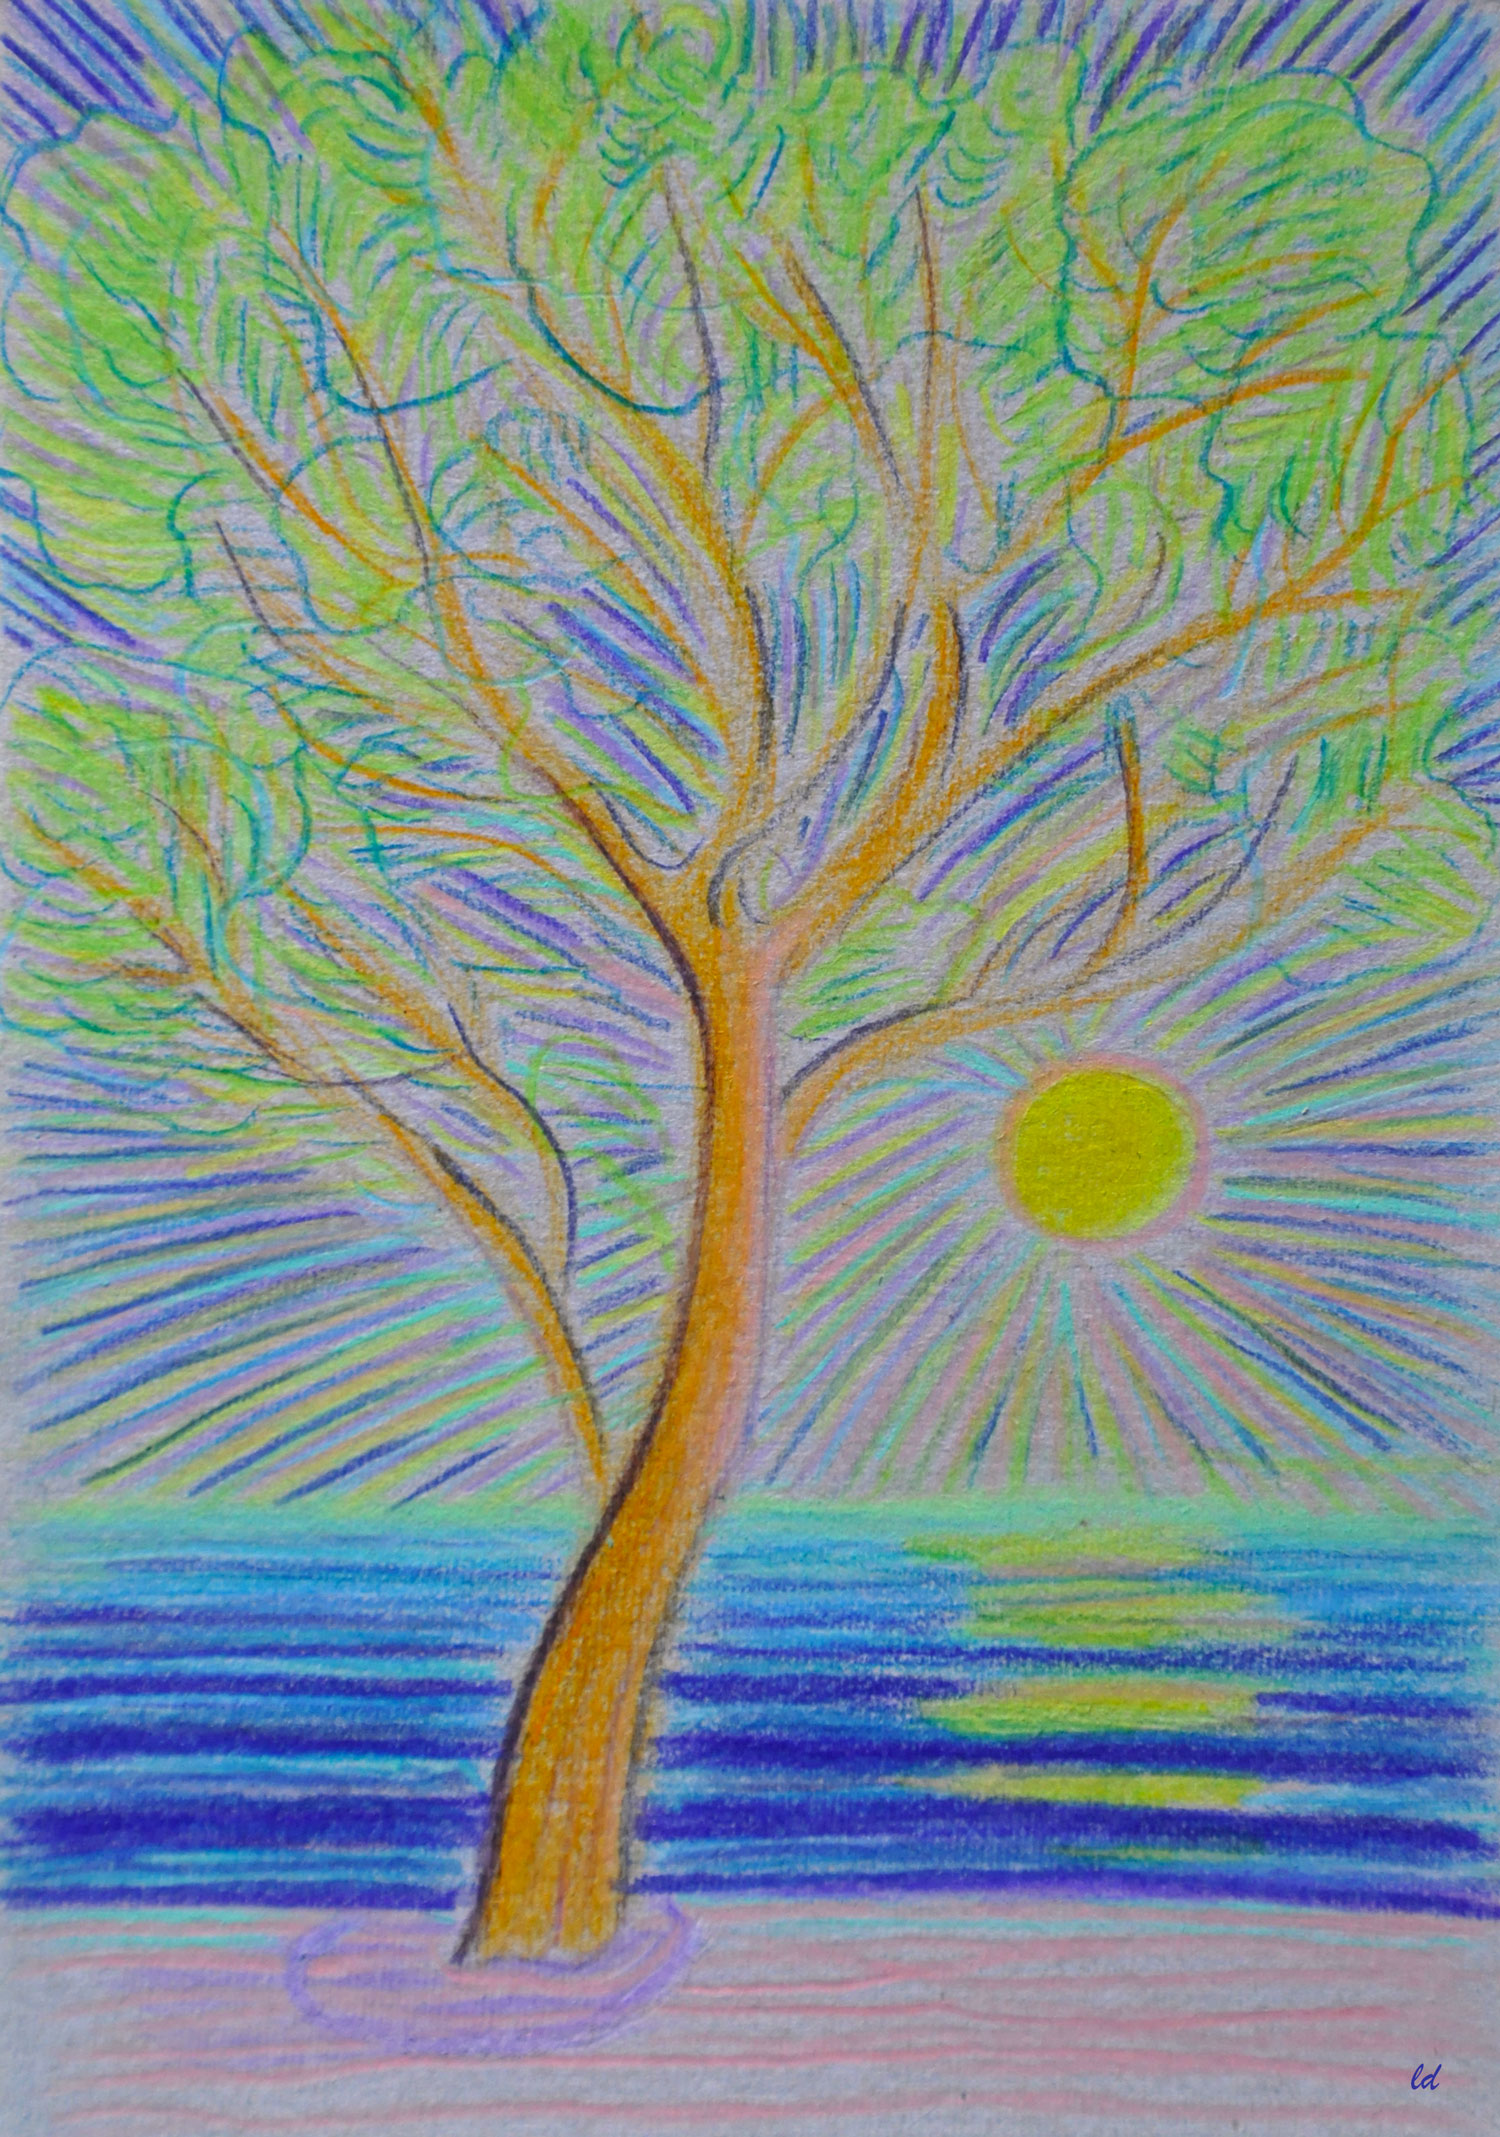 Cala Gonone 14, il pino sulla spiaggia. Crayon de couleur sur carton, 21x15. 2021